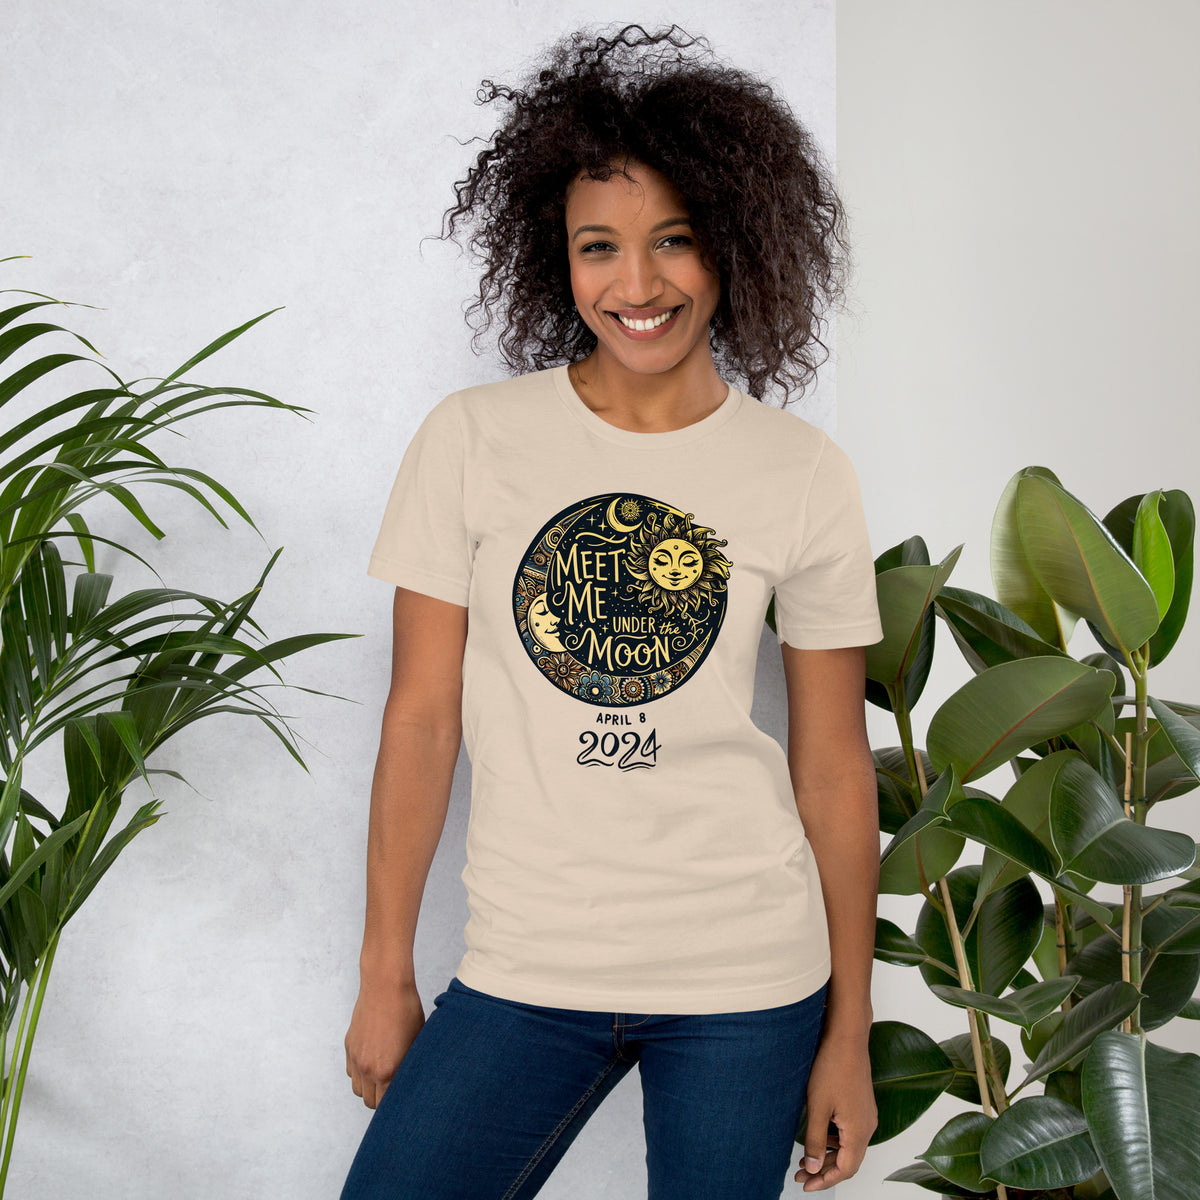 2024 Solar Eclipse Tee: Boho Celestial Event Shirt - Meet Me Under The Moon, Ideal Astrology & Moon Lovers Gift